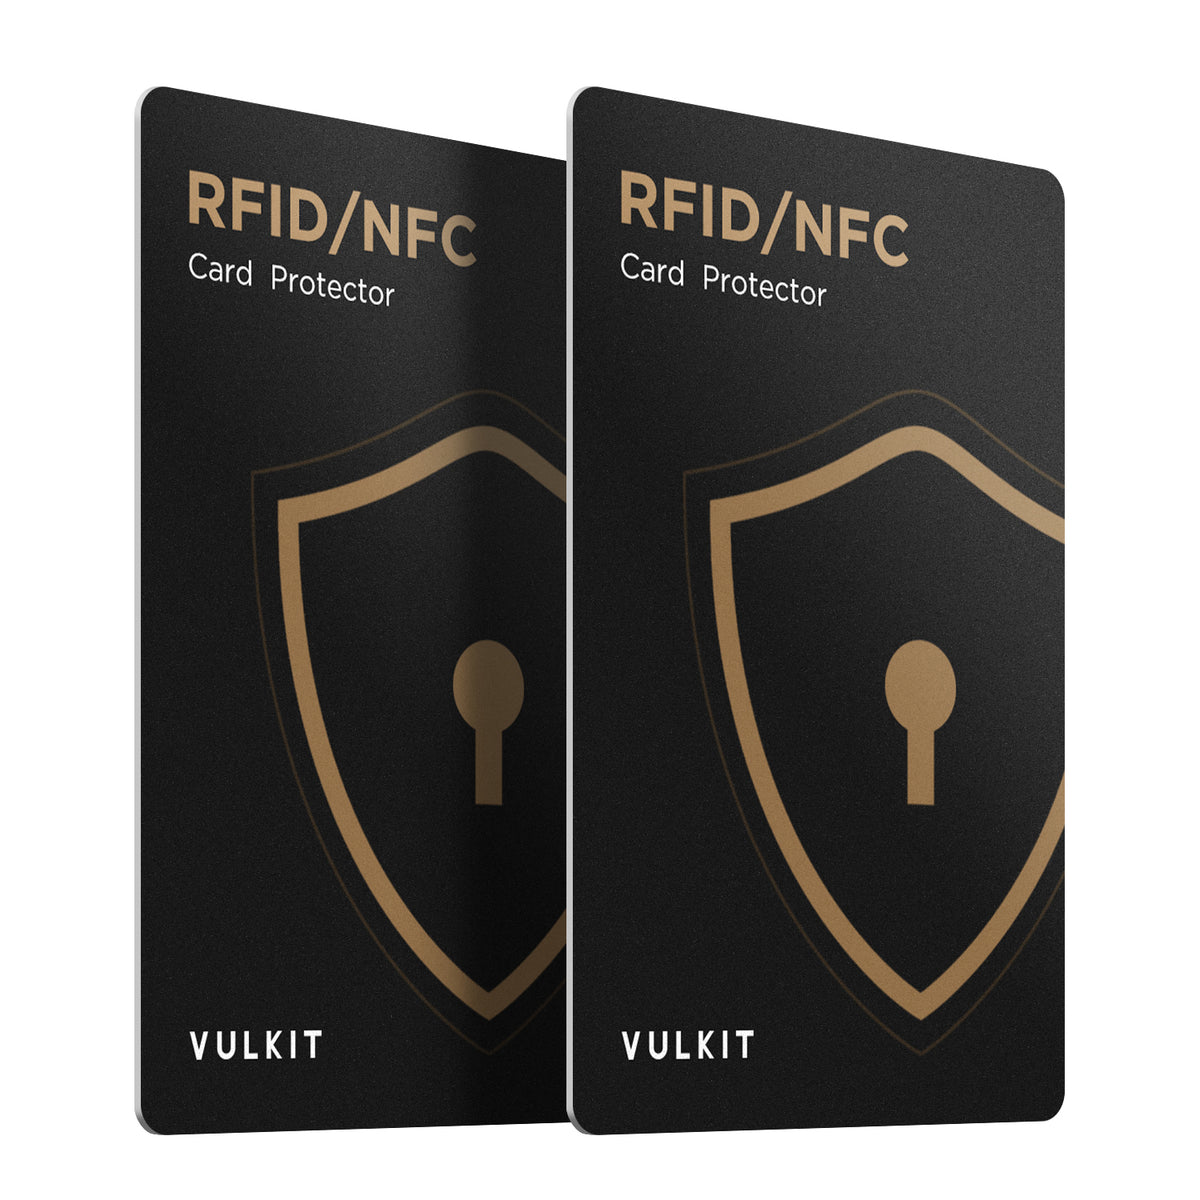 Pry Shield - RFID & NFC Blocking Card